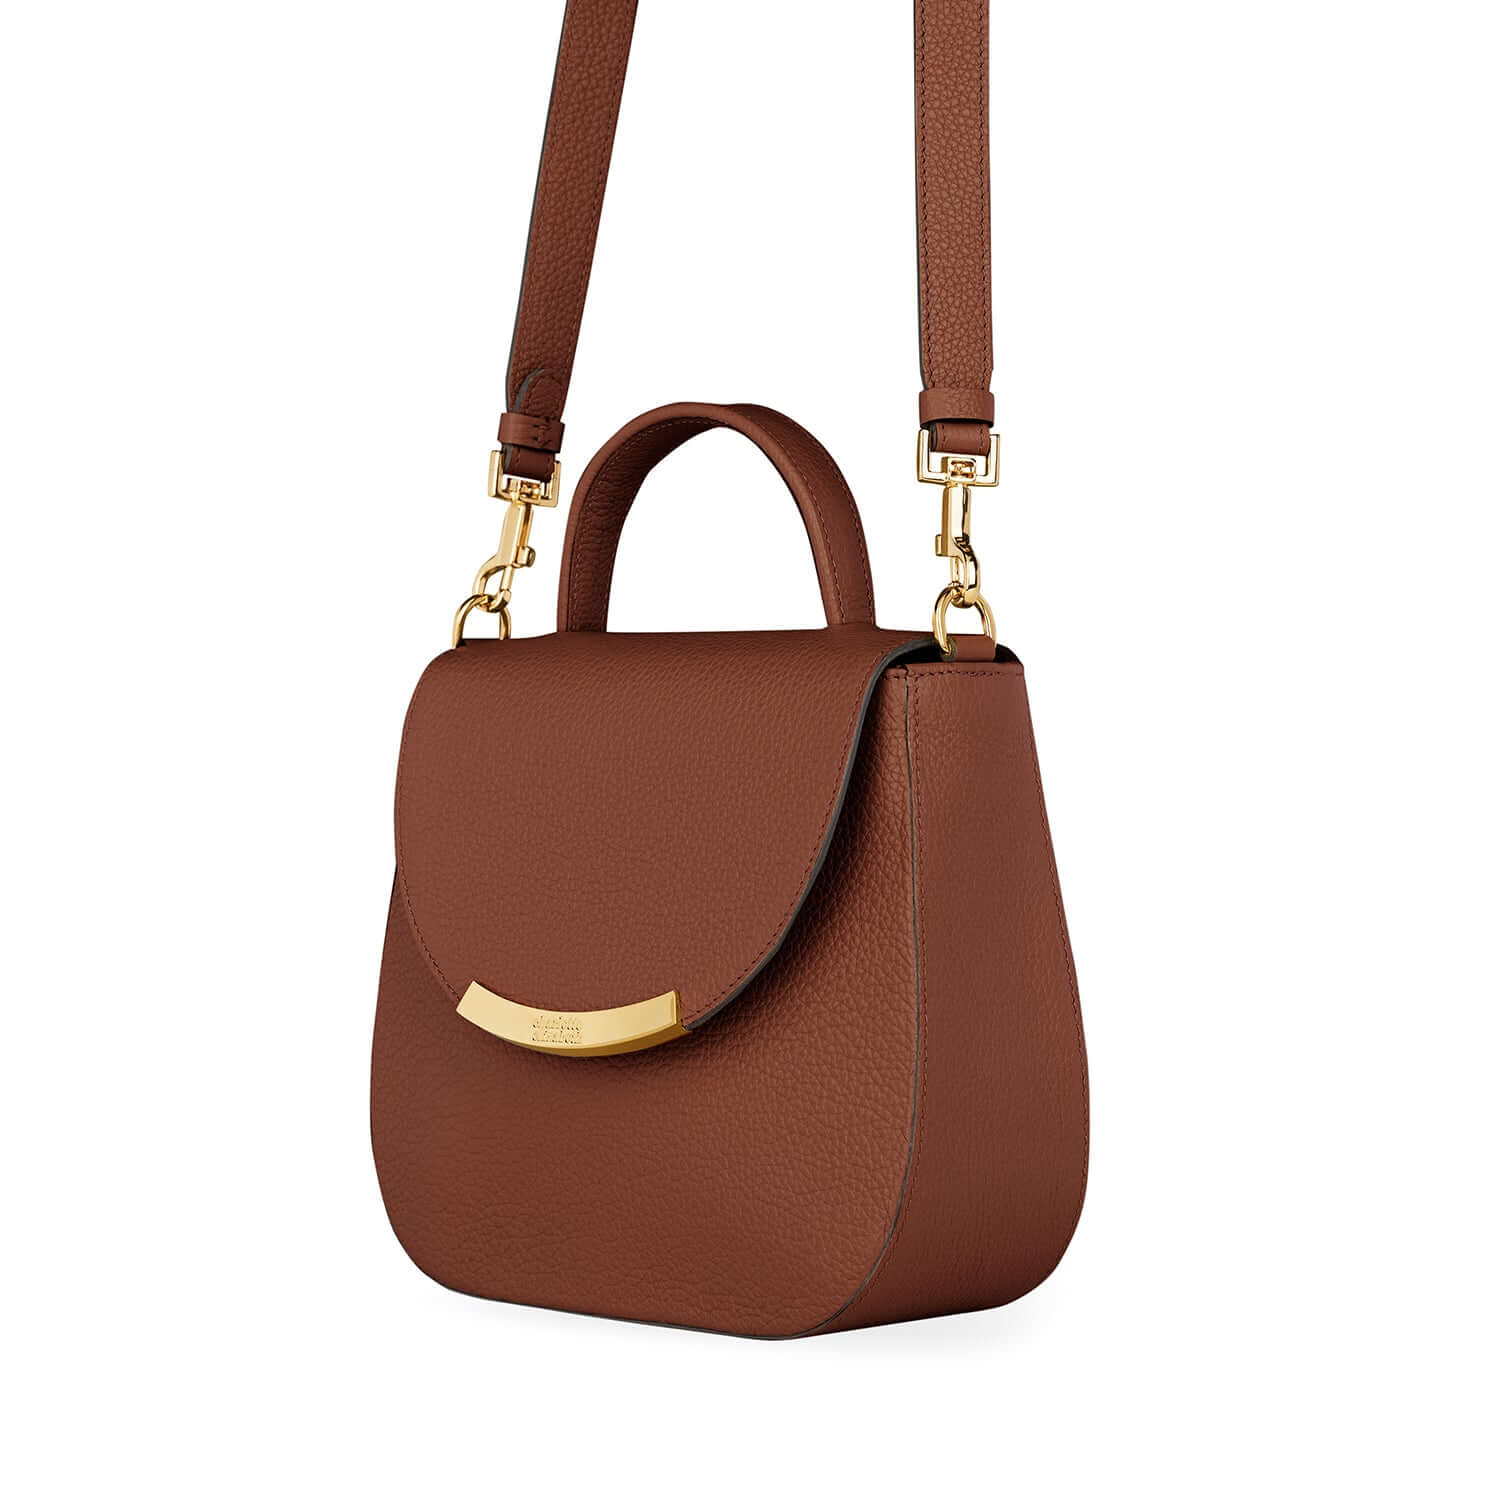 crossbody womens british made handbag artisan leather classic brown tan